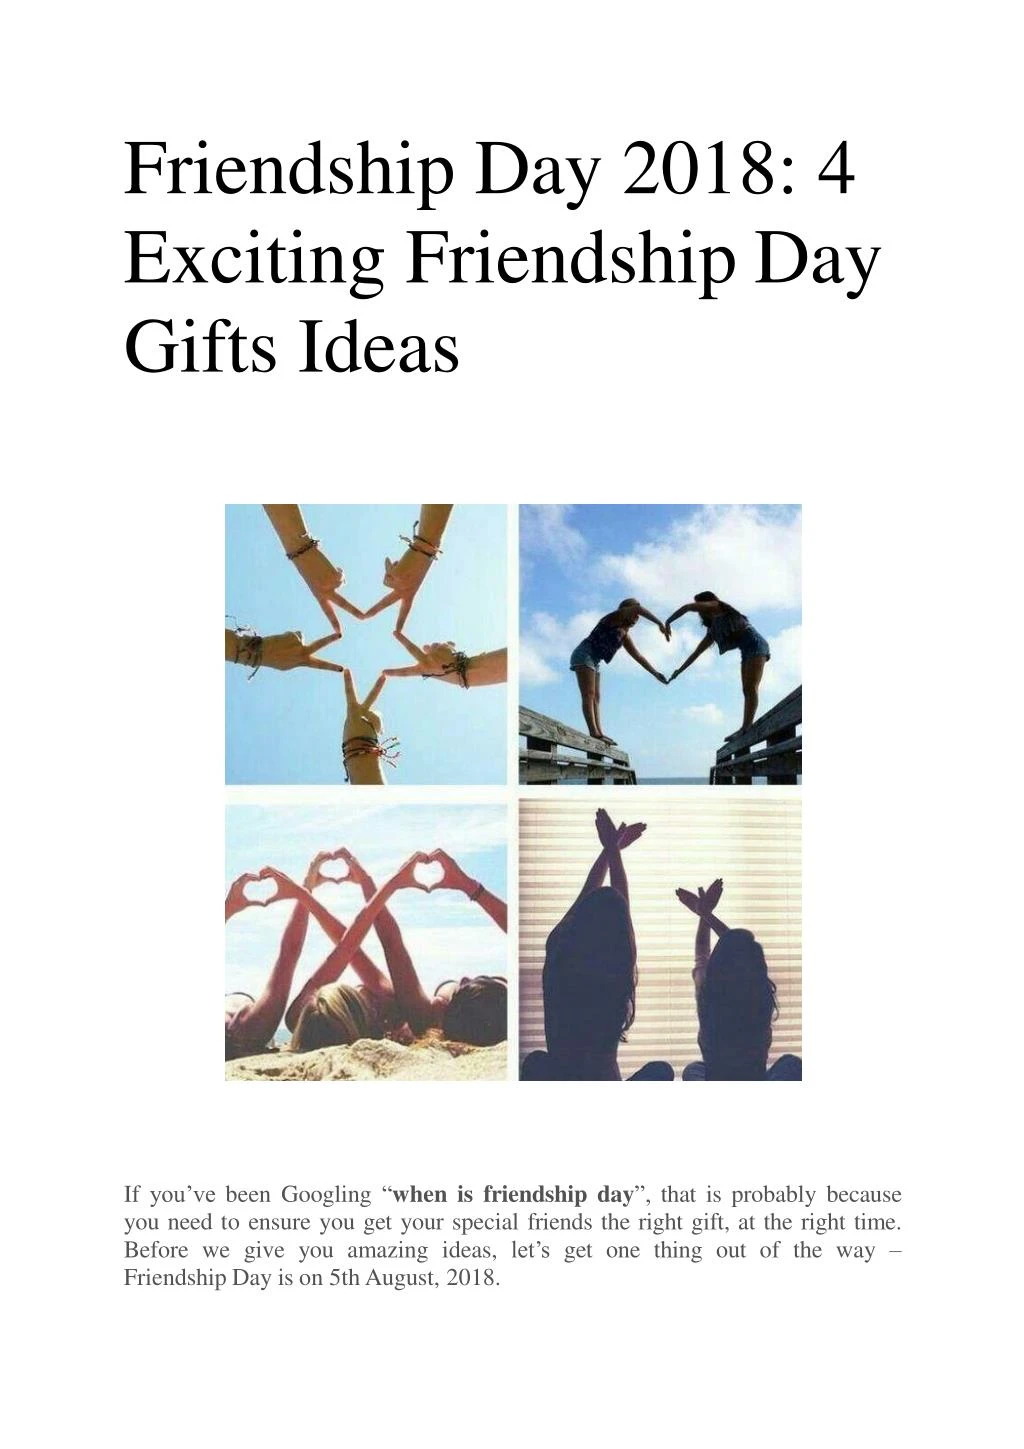 Special Friendship Day Gift Ideas for Best Friend - SendBestGift.com